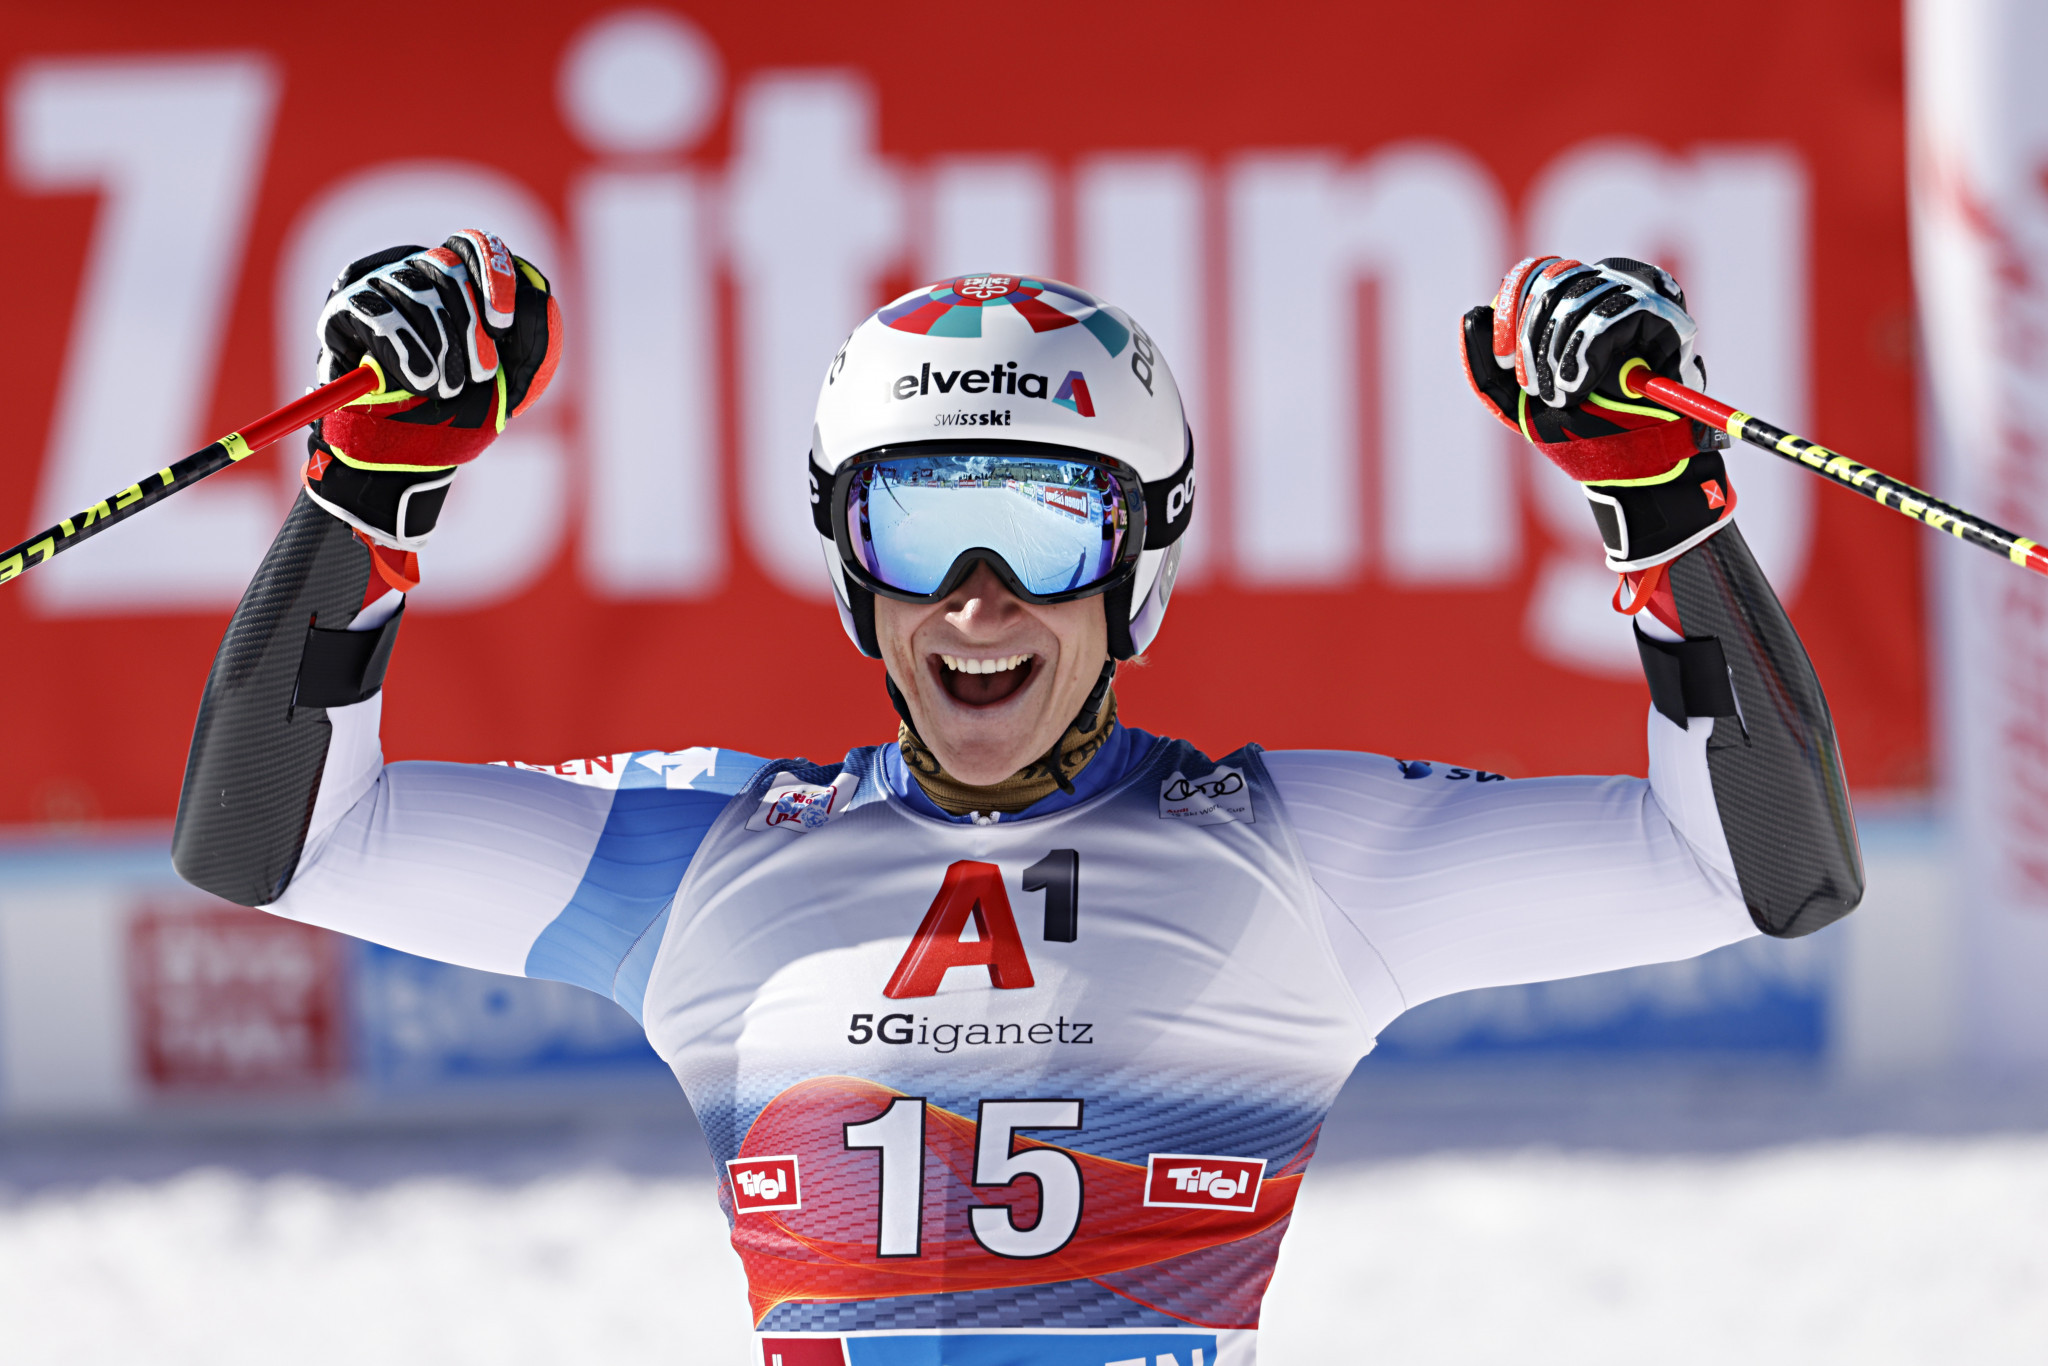 Odermatt eyeing more giant slalom success at FIS Alpine Ski World Cup leg in Santa Caterina